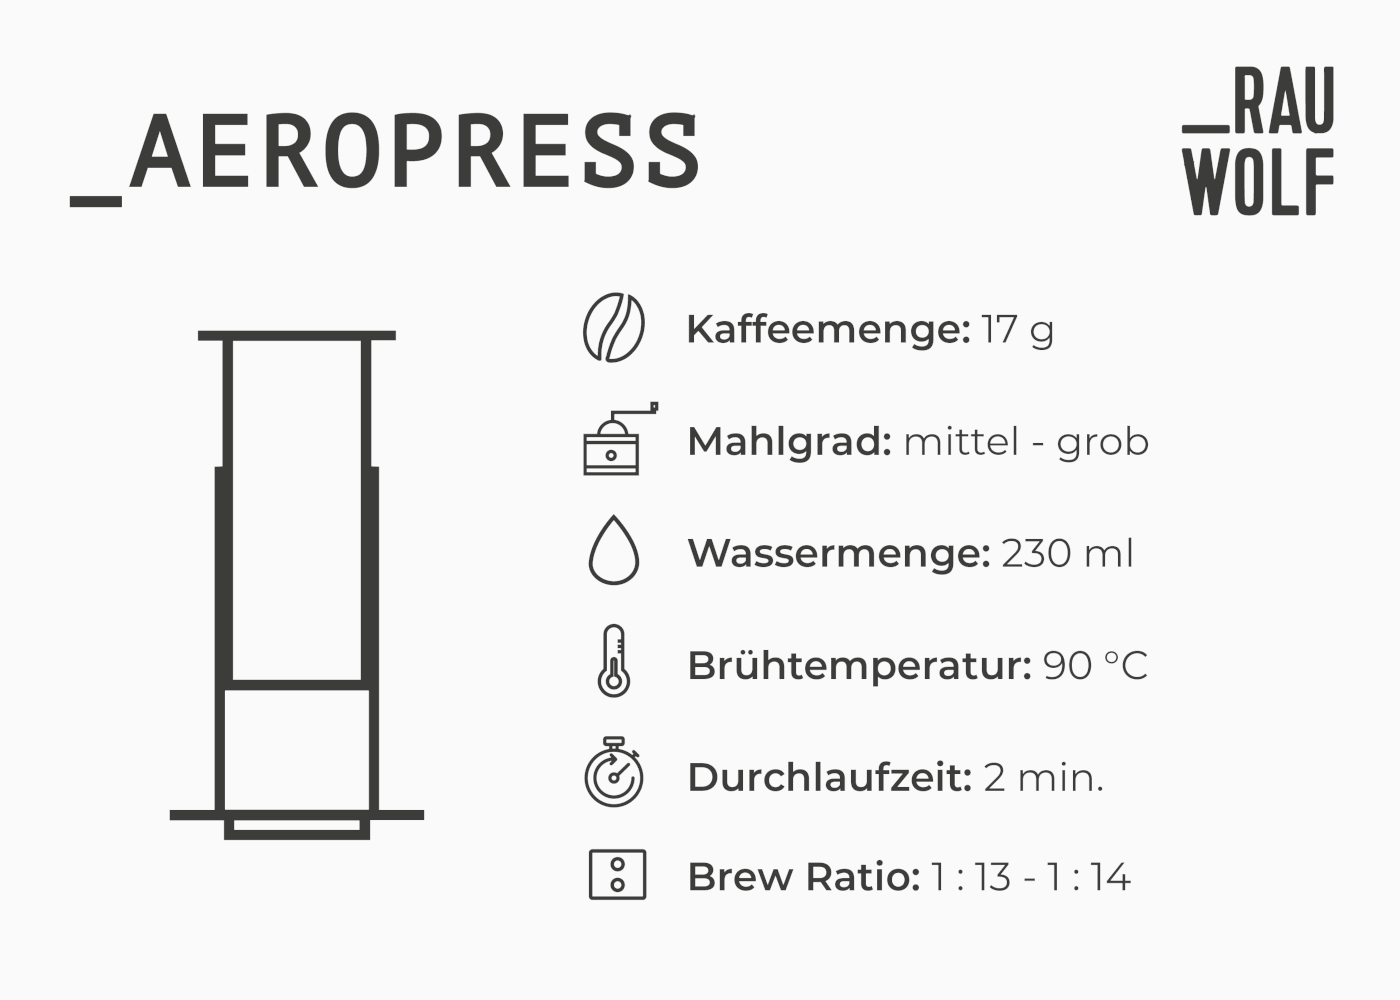 Aeropress-Zubereitung: Kaffee-Mahlgrad, Durchlaufzeit, Brew Ratio etc.